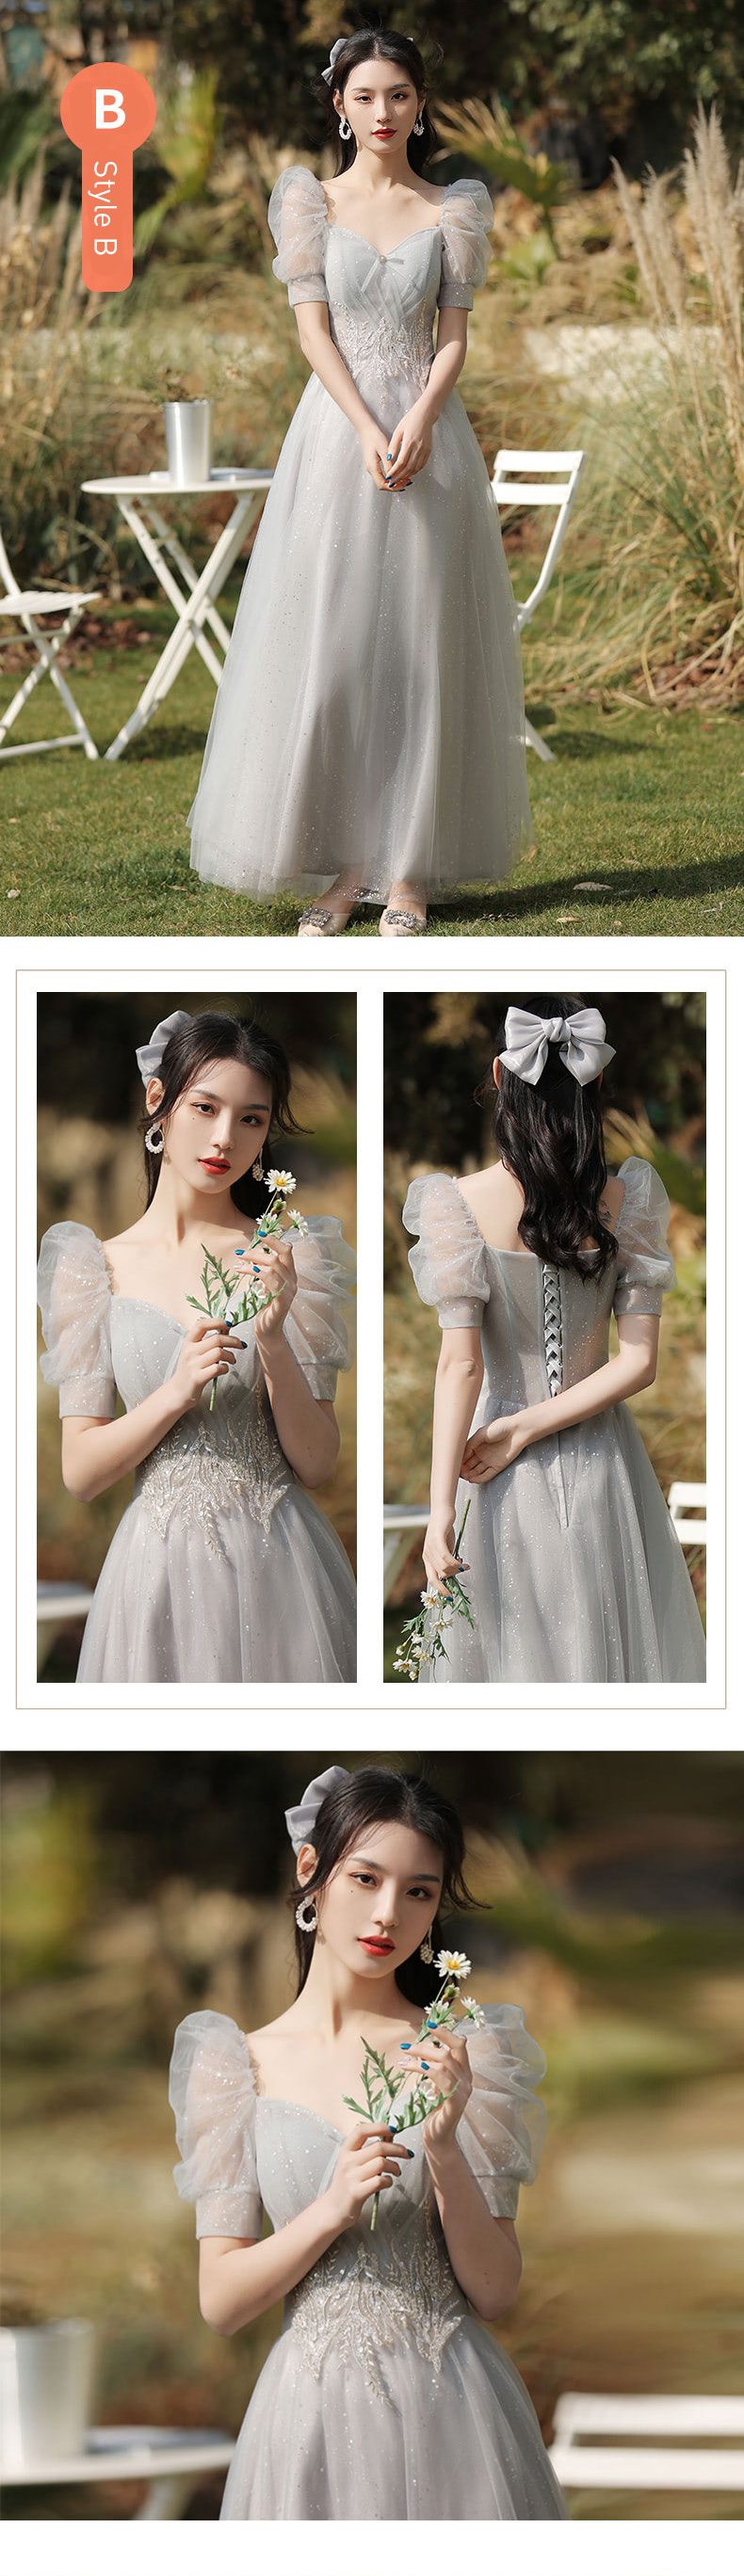 Beautiful-Gray-Occasion-Prom-Bridesmaid-Evening-Maxi-Dress18.jpg